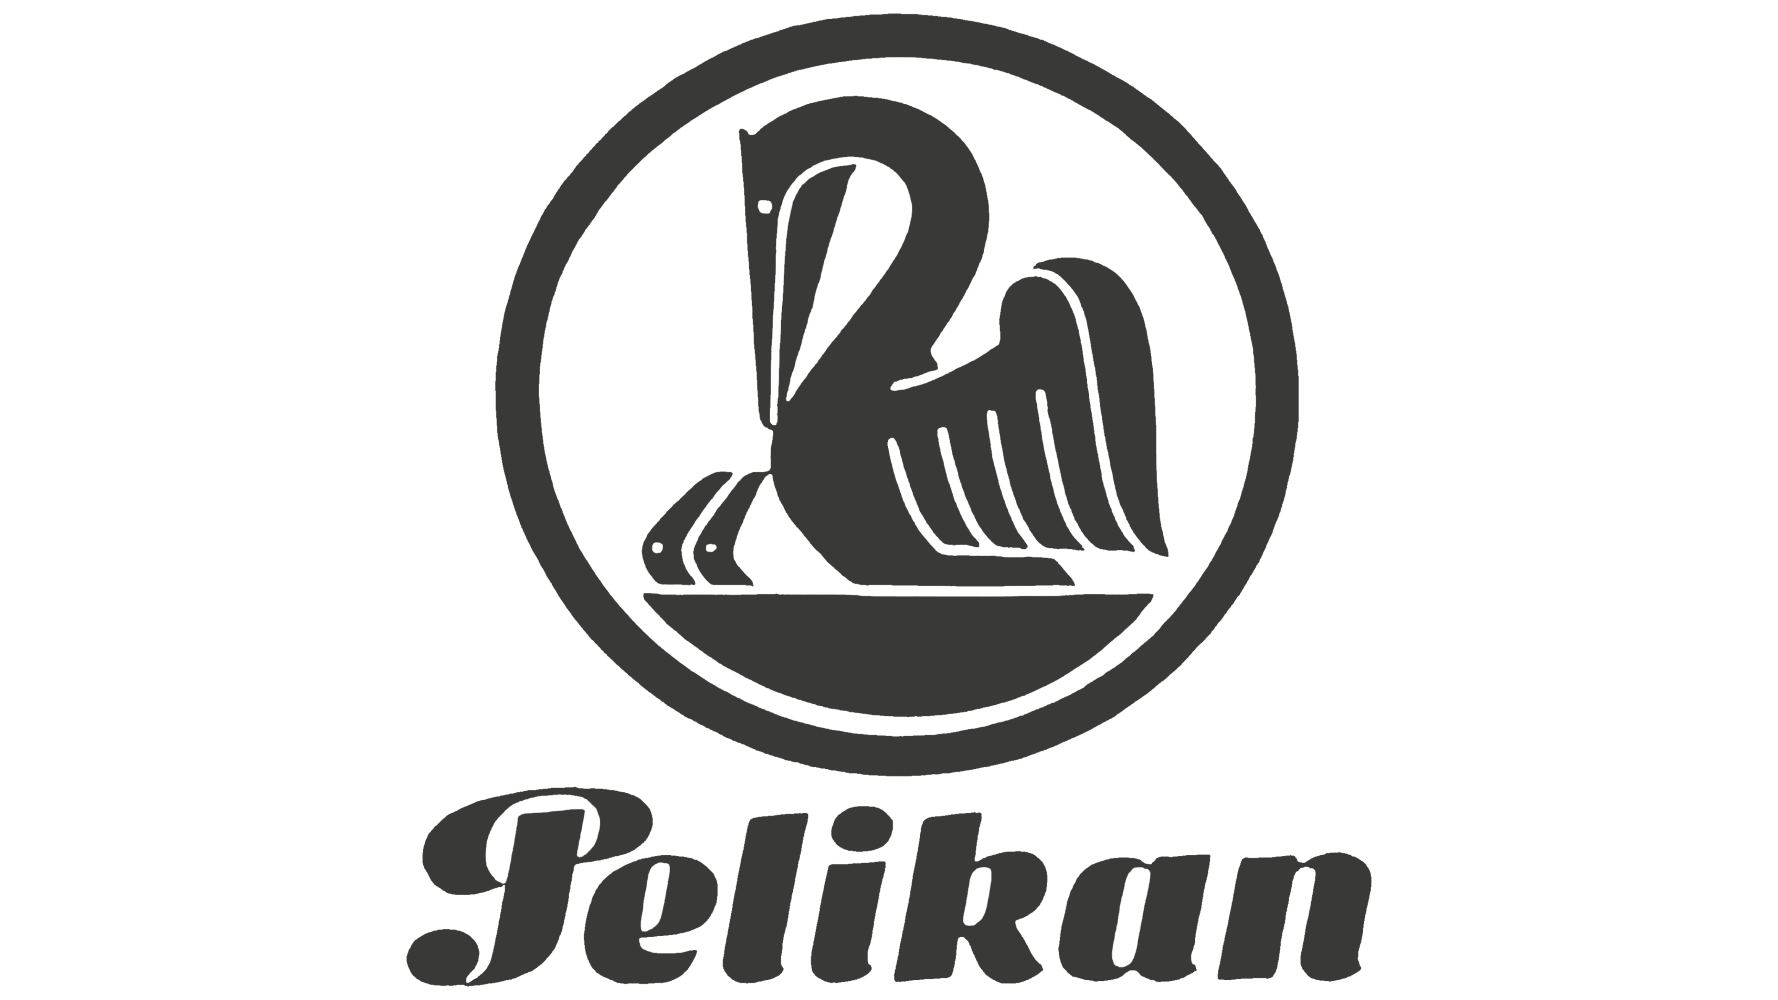 PAINTBOX - Pelikan Store Online